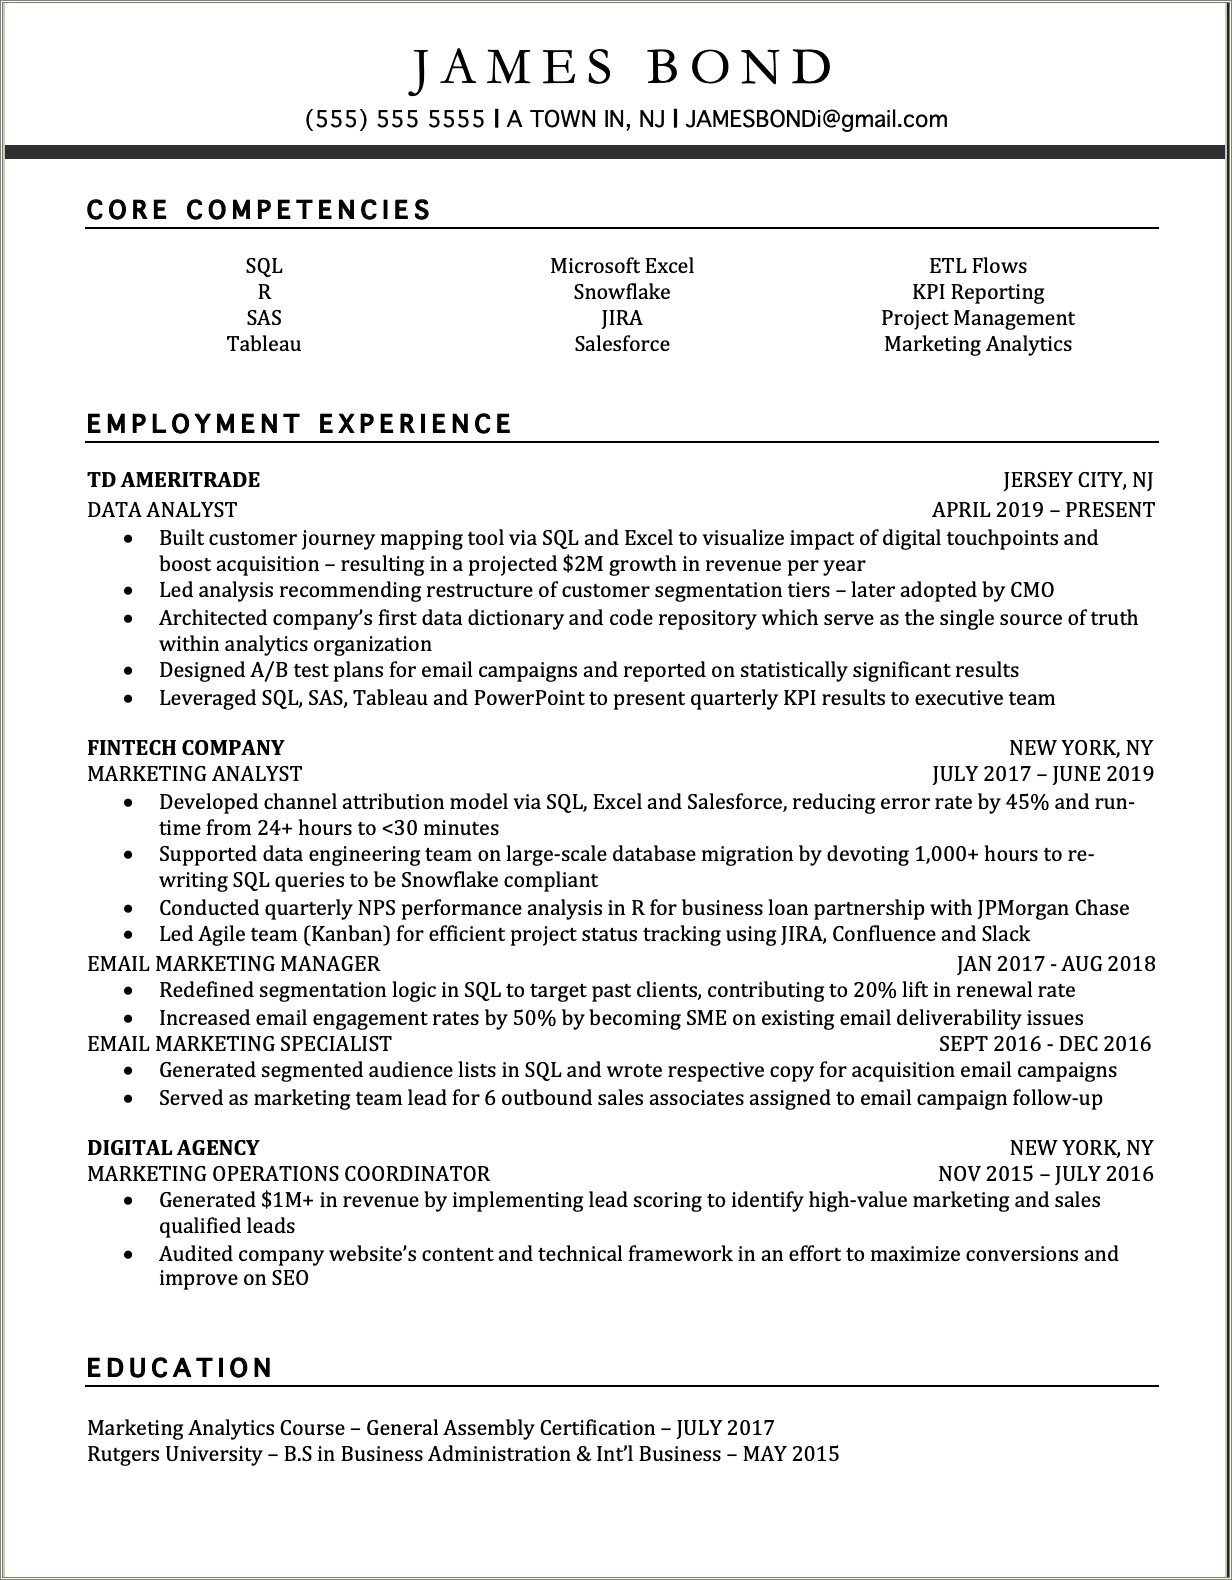 Resume Advice Format Multiple Jobs Same Company